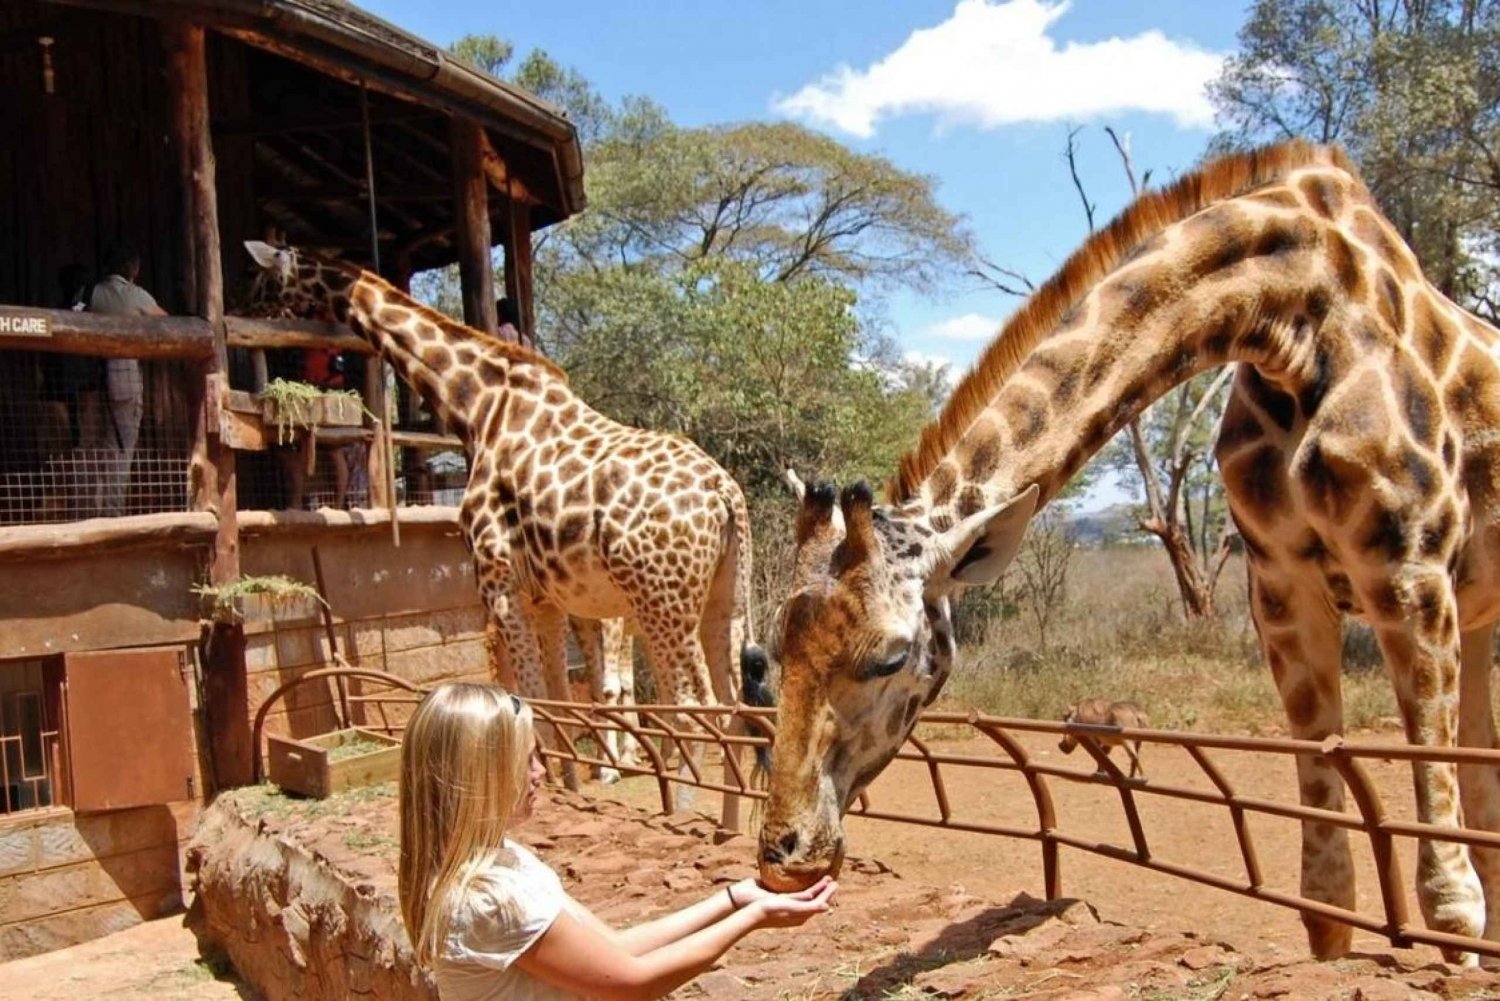 Parque de Nairobi, Elefante, Jirafa, Bomas y Cena Carnívora